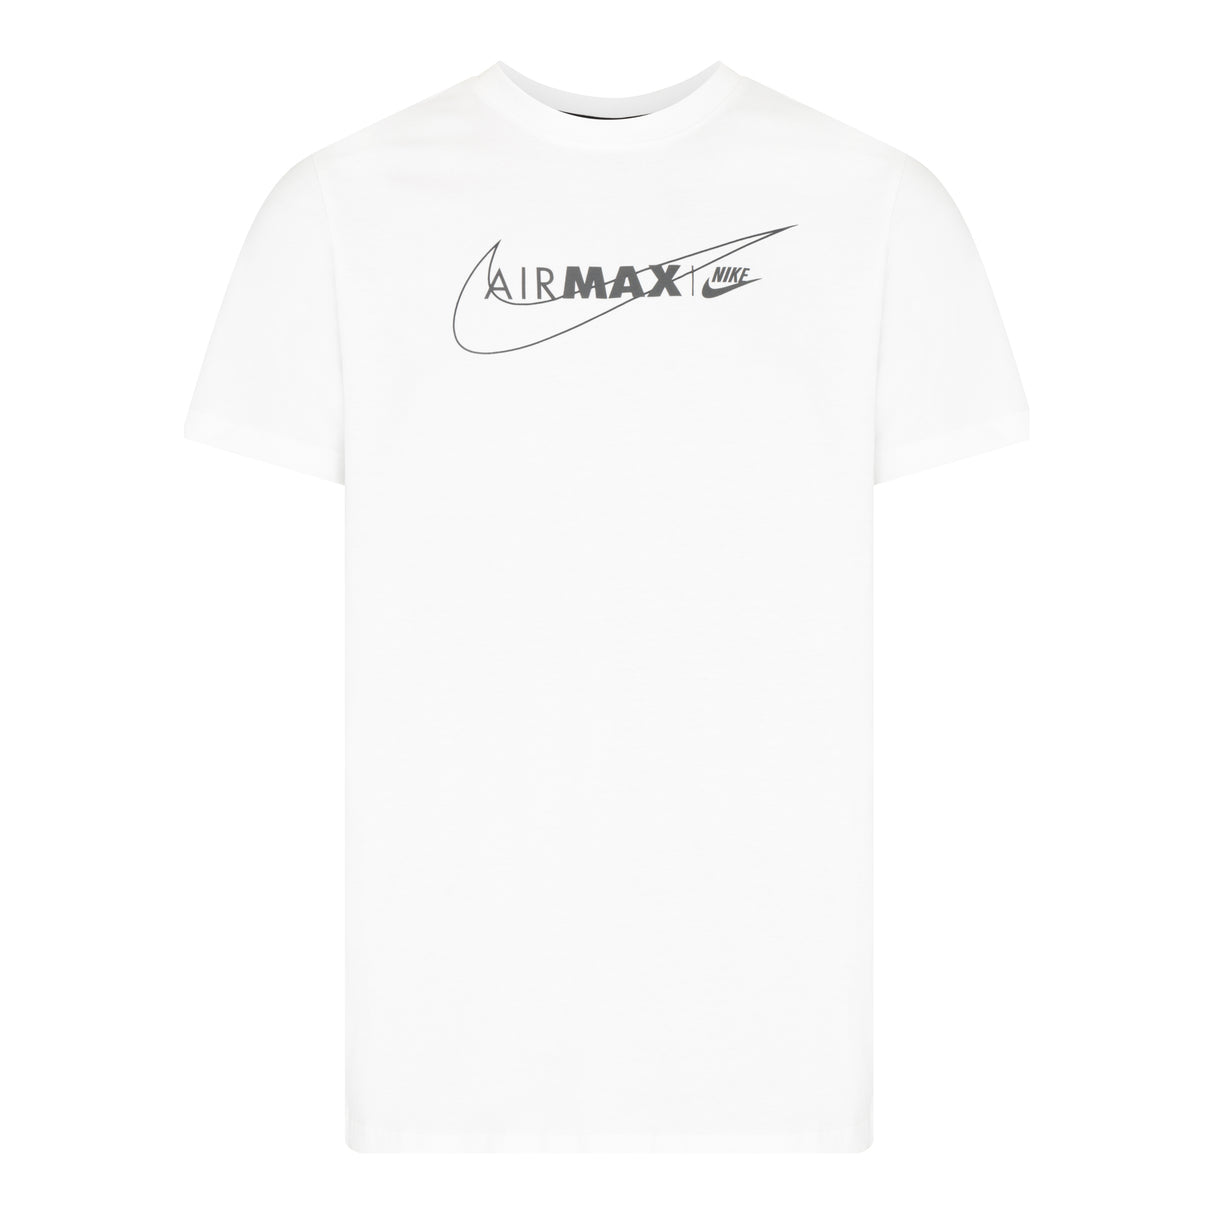 Nike Sportswear Men's Air Max Short Sleeve T Shirt in White